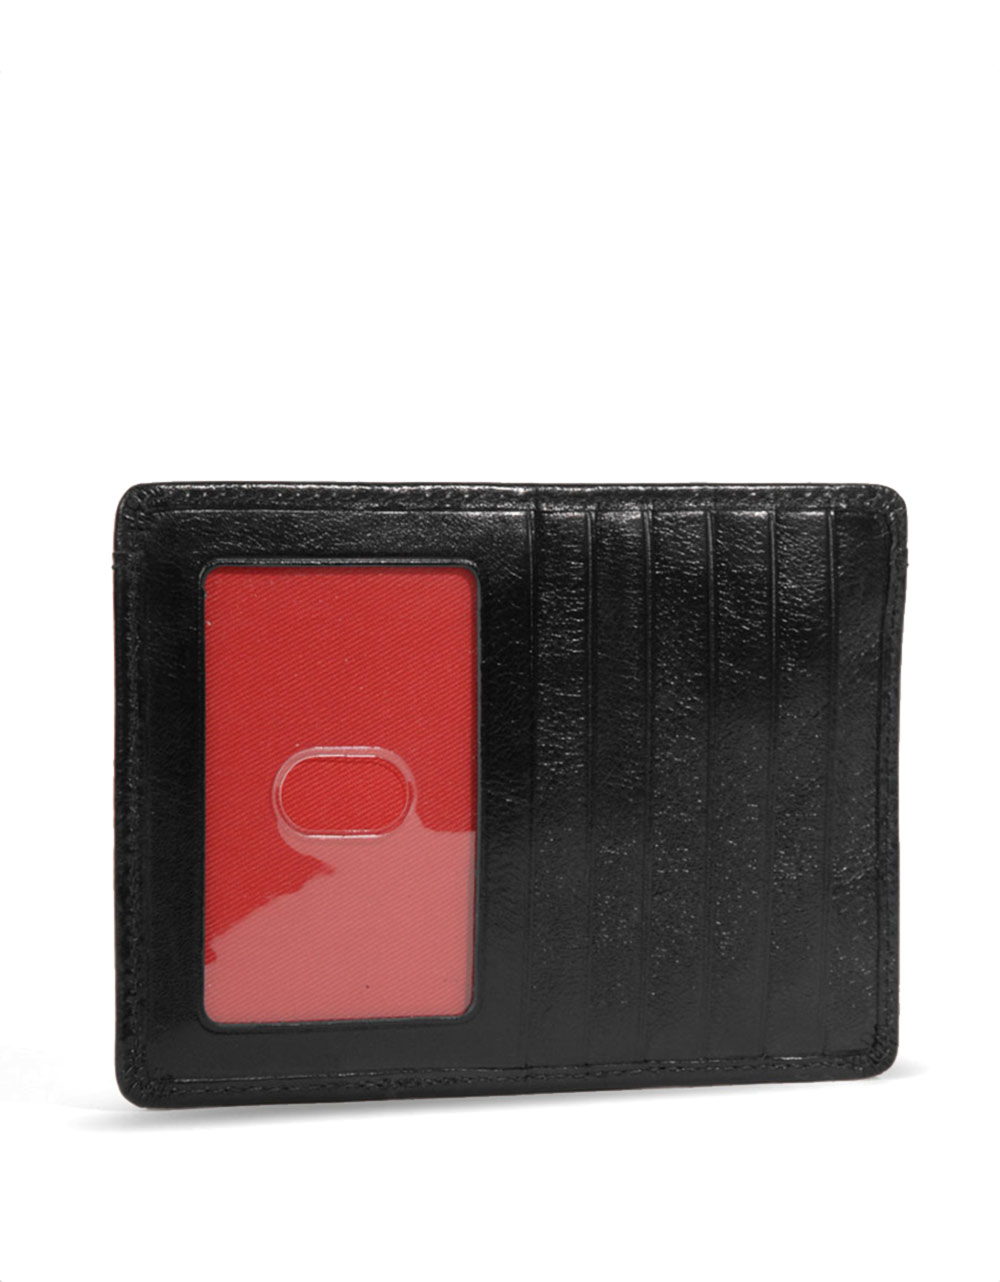 Hobo International Leather Credit Card Wallet in Black | Lyst